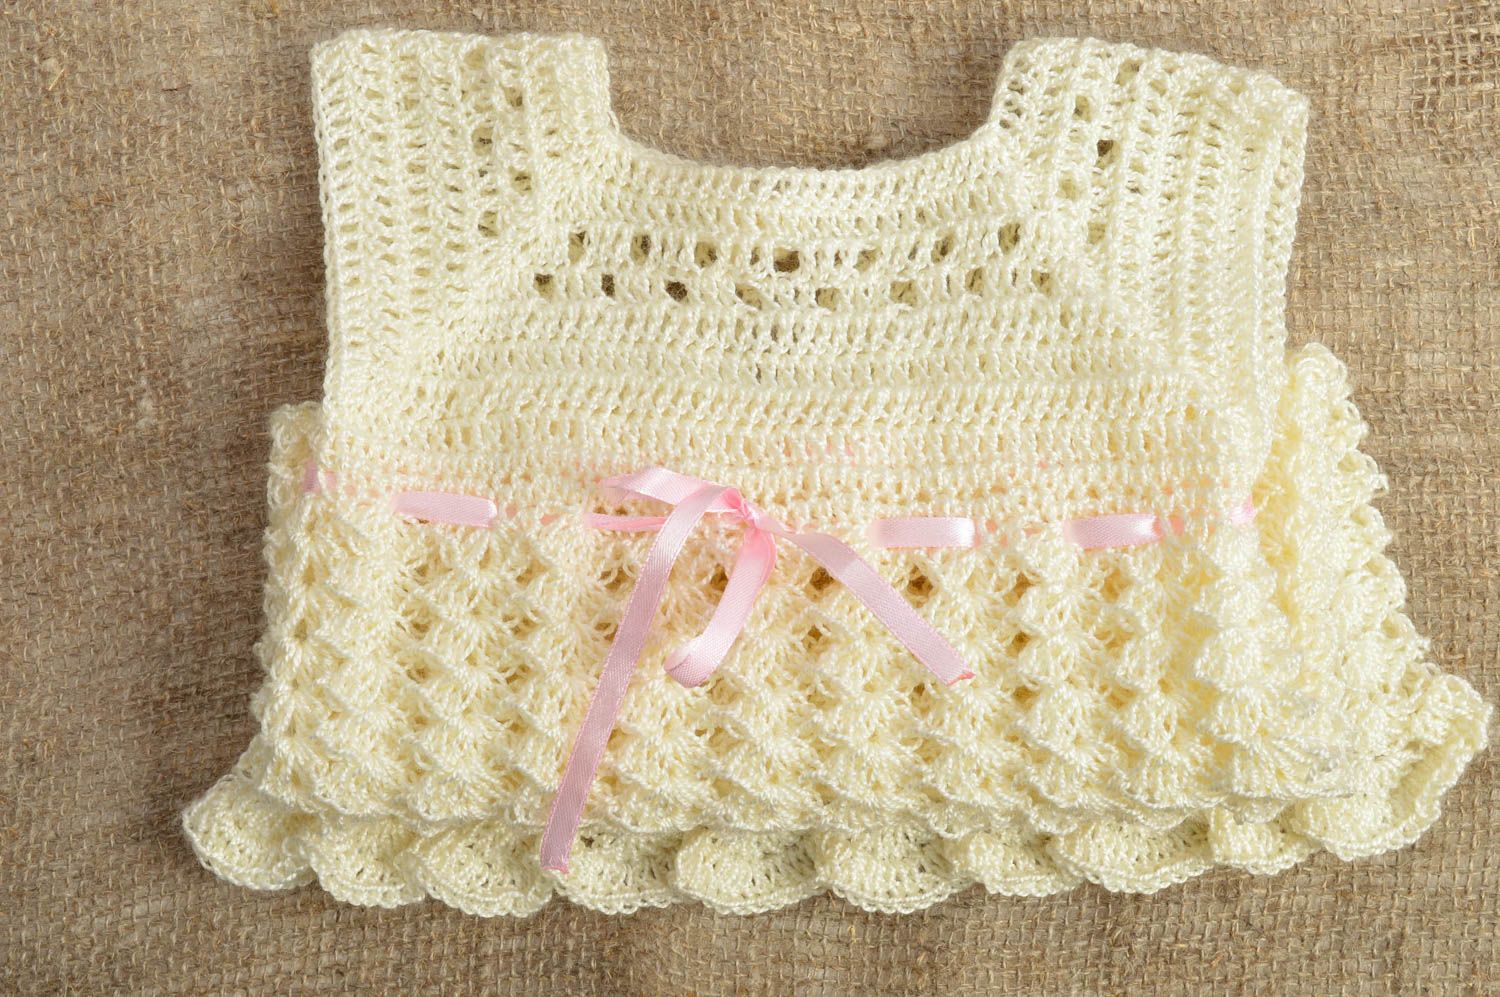 Crocheted baby dress crochet openwork beautiful handmade clothes for children photo 1